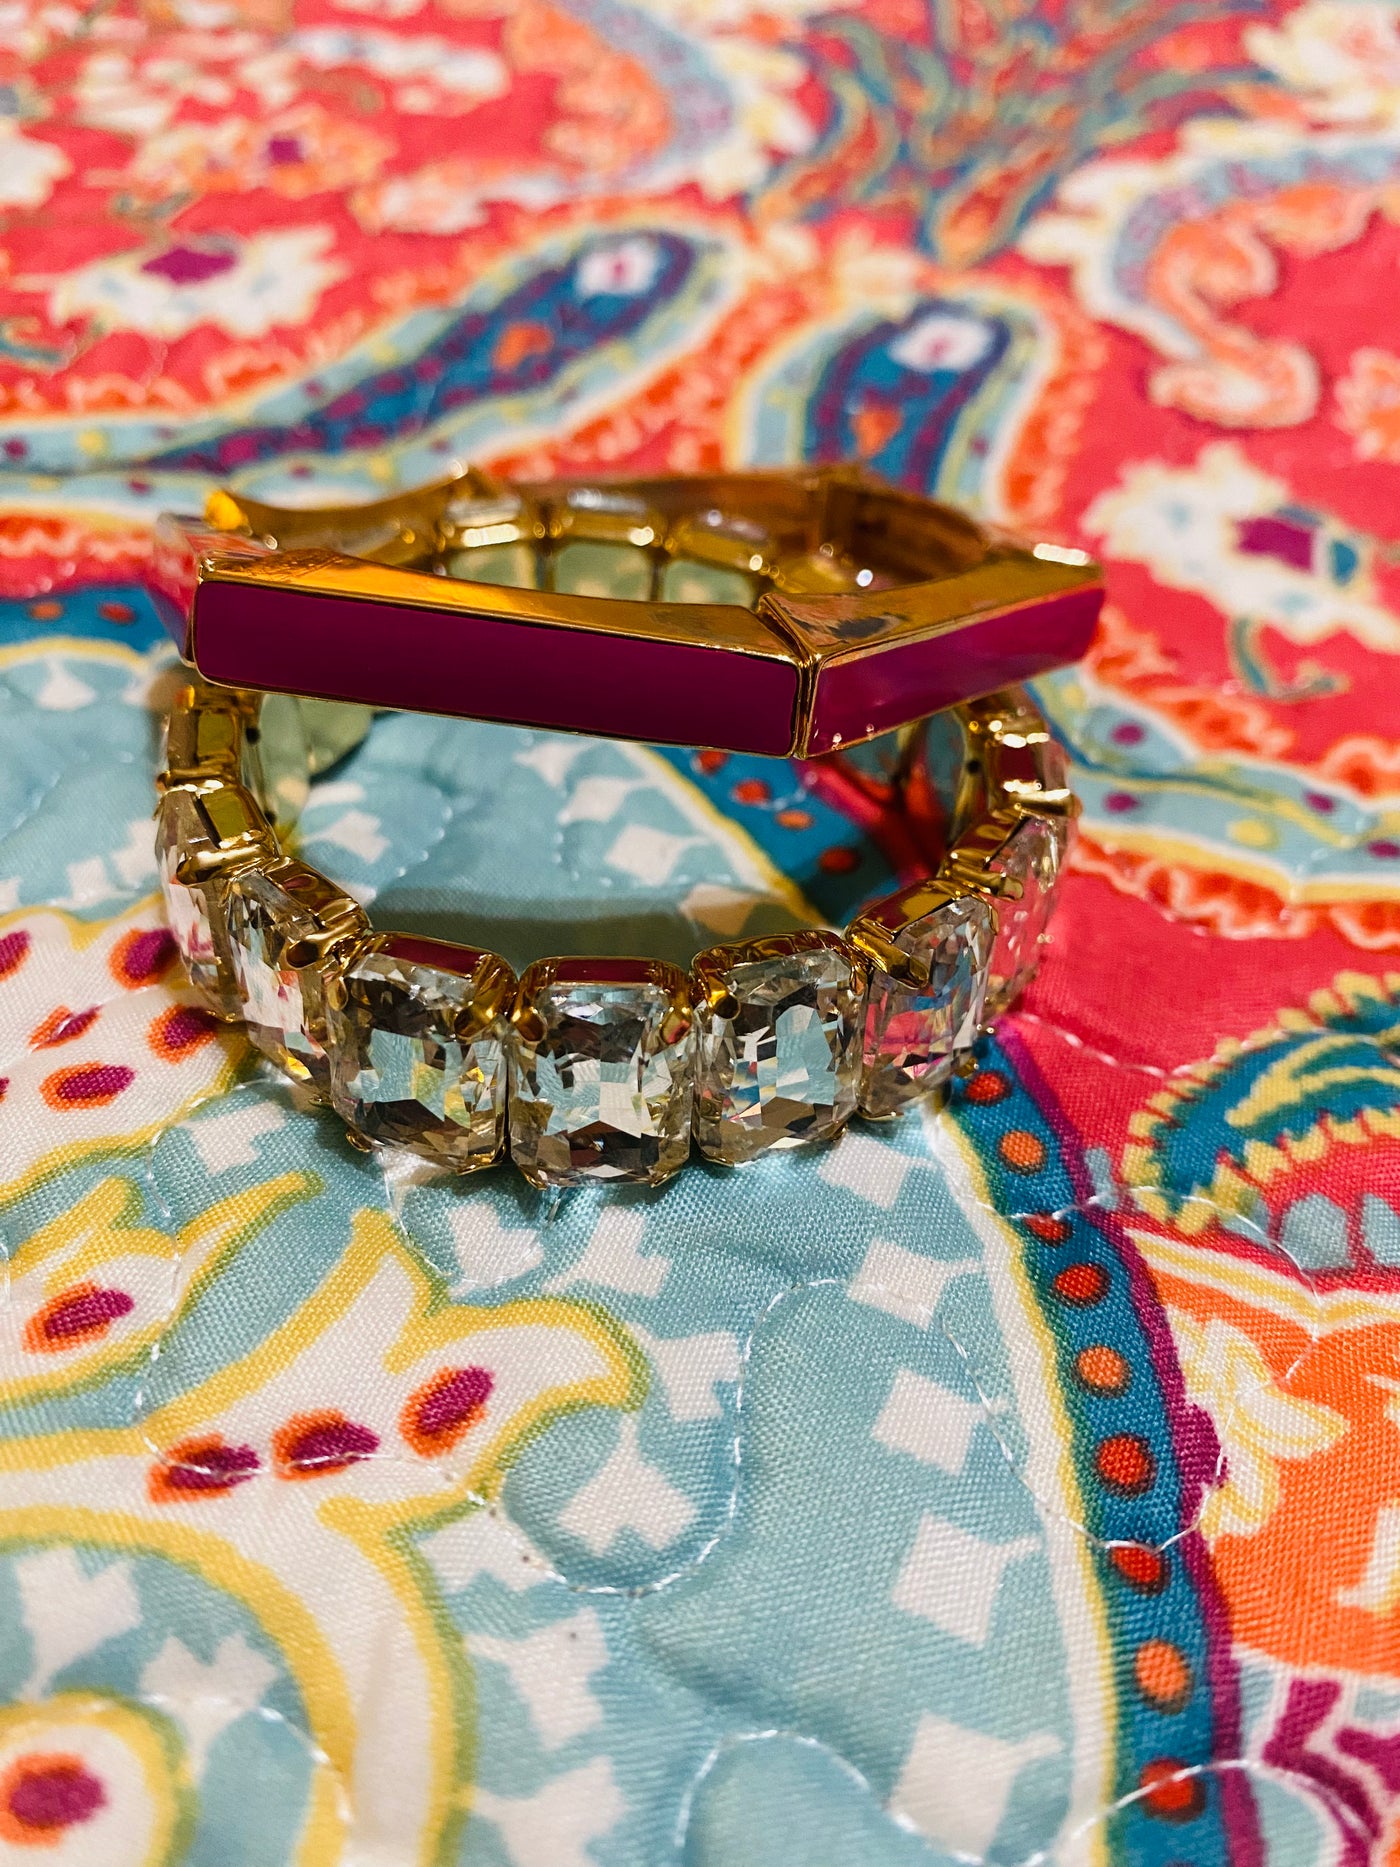 Rhinestone bracelet